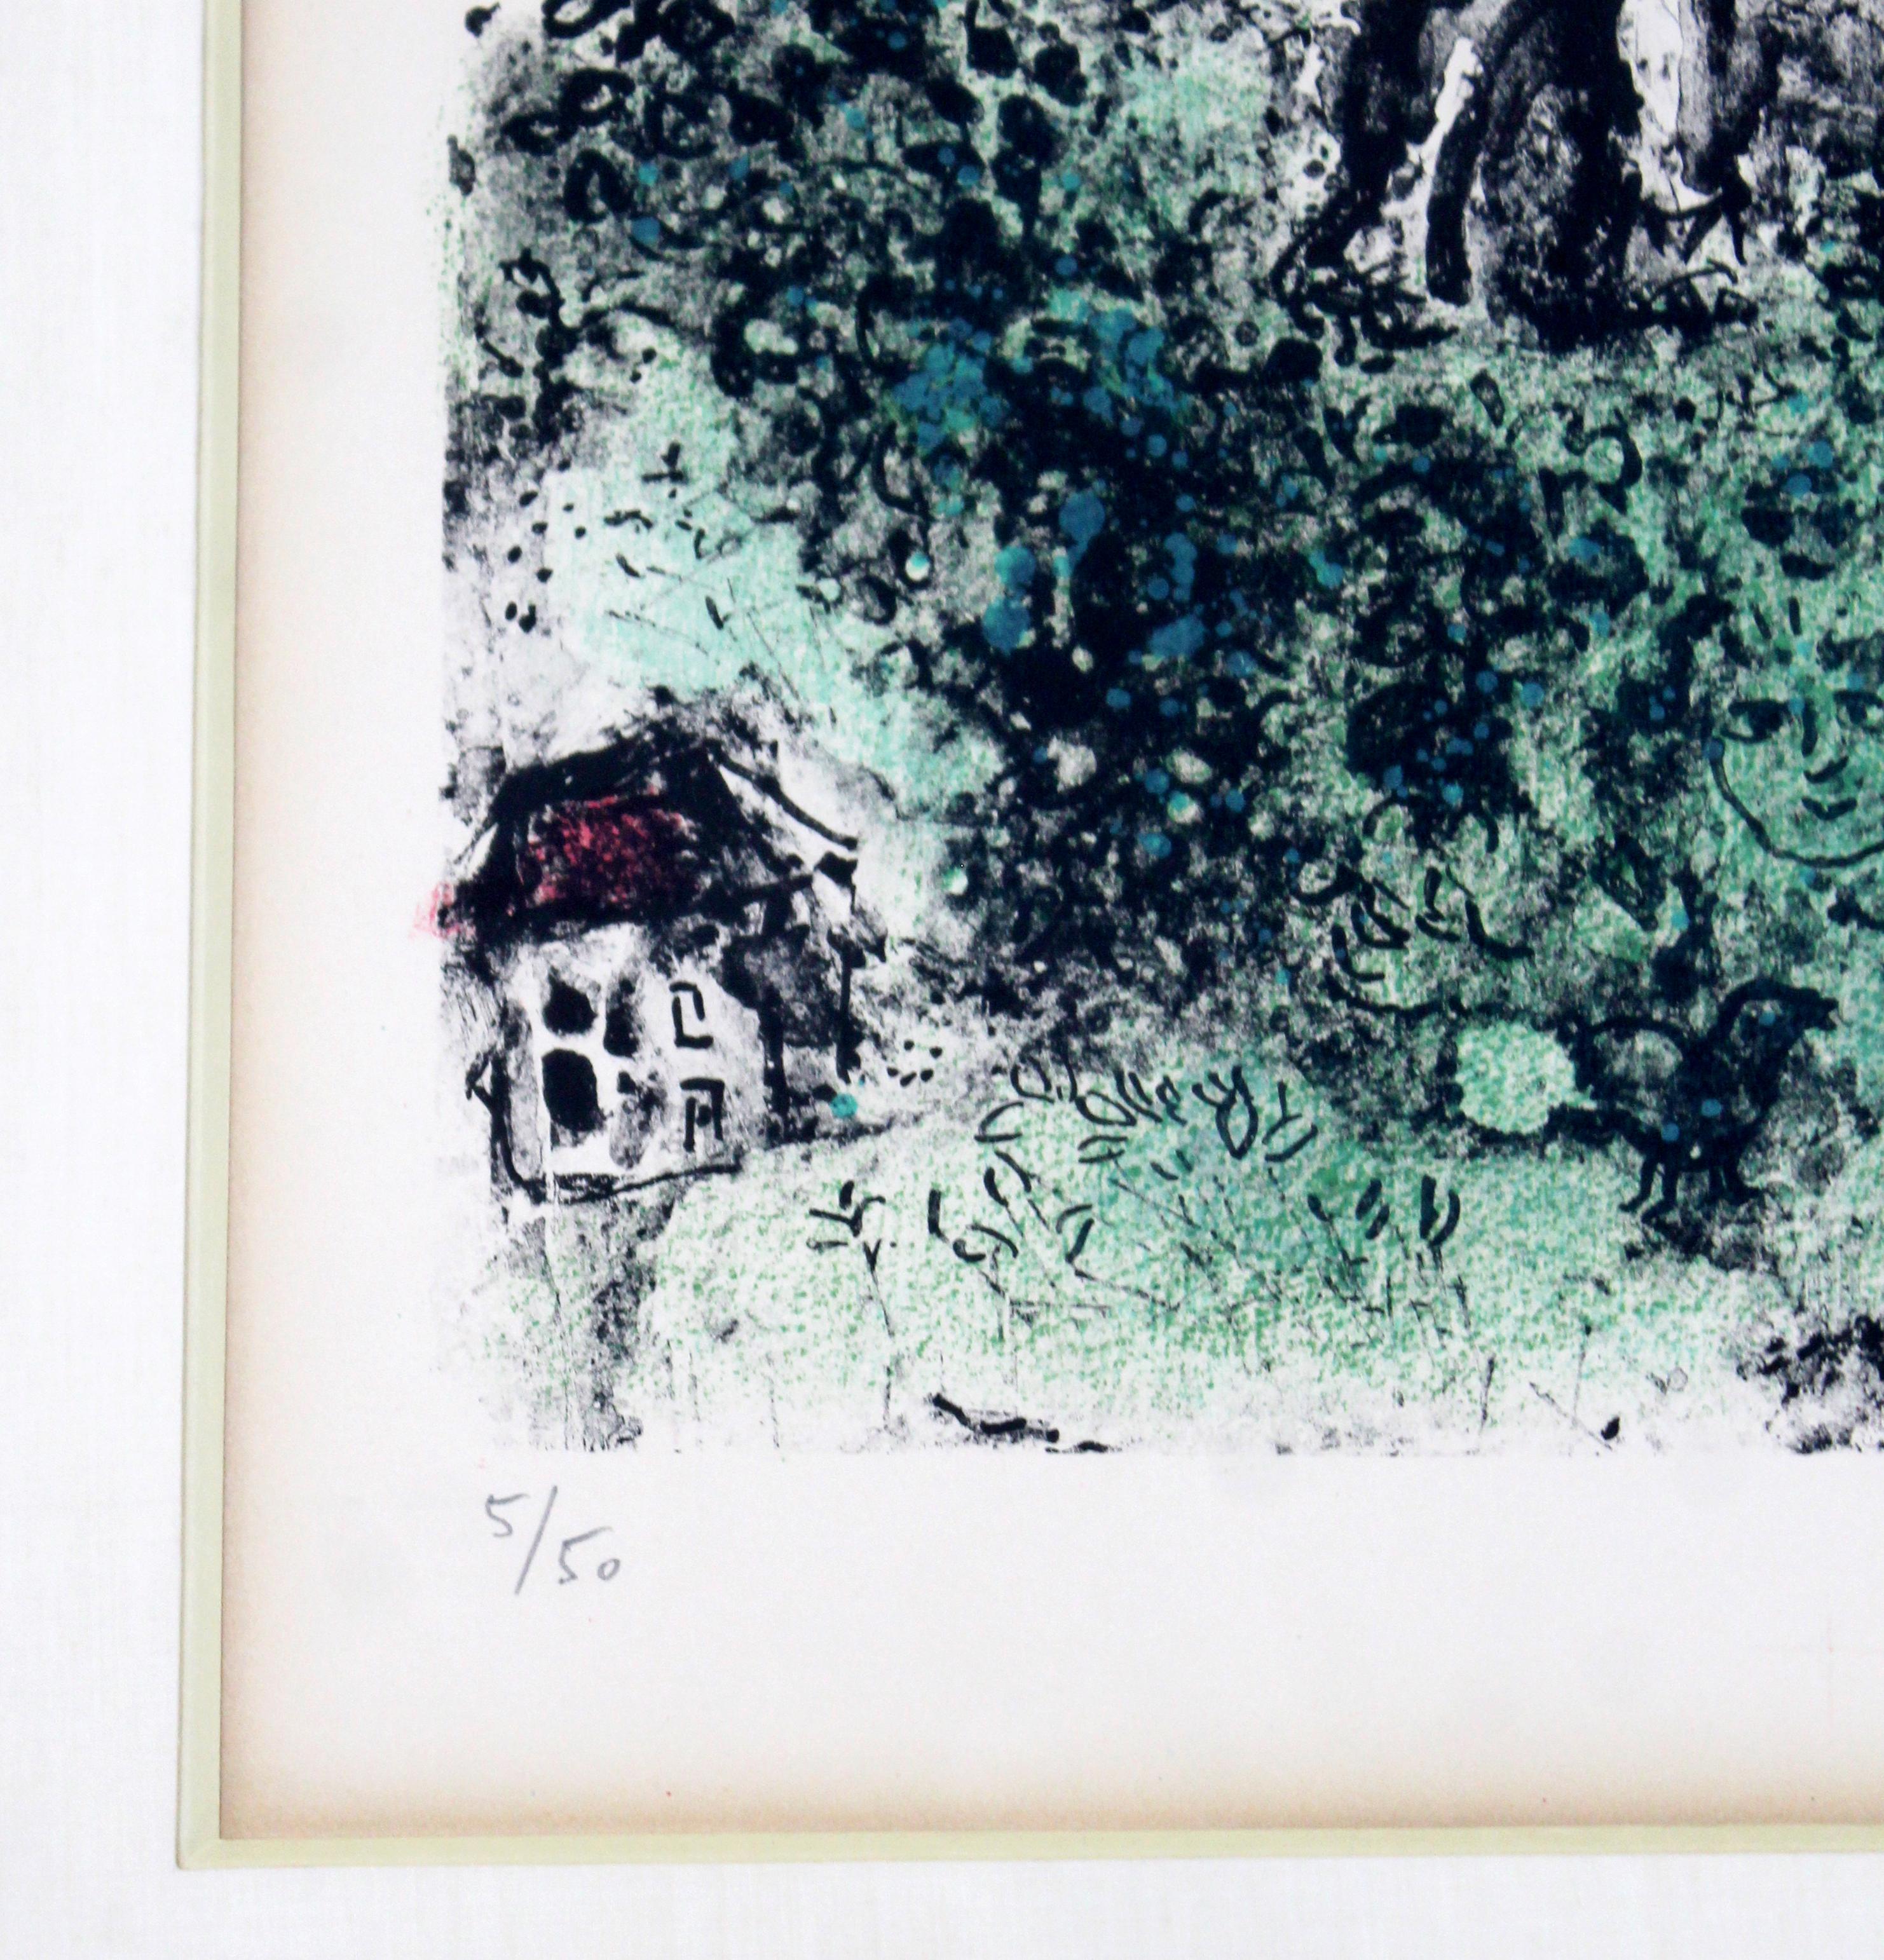 Paper Mid-Century Modern Framed Marc Chagall Signed Lithograph Un jardin perdu 5/50